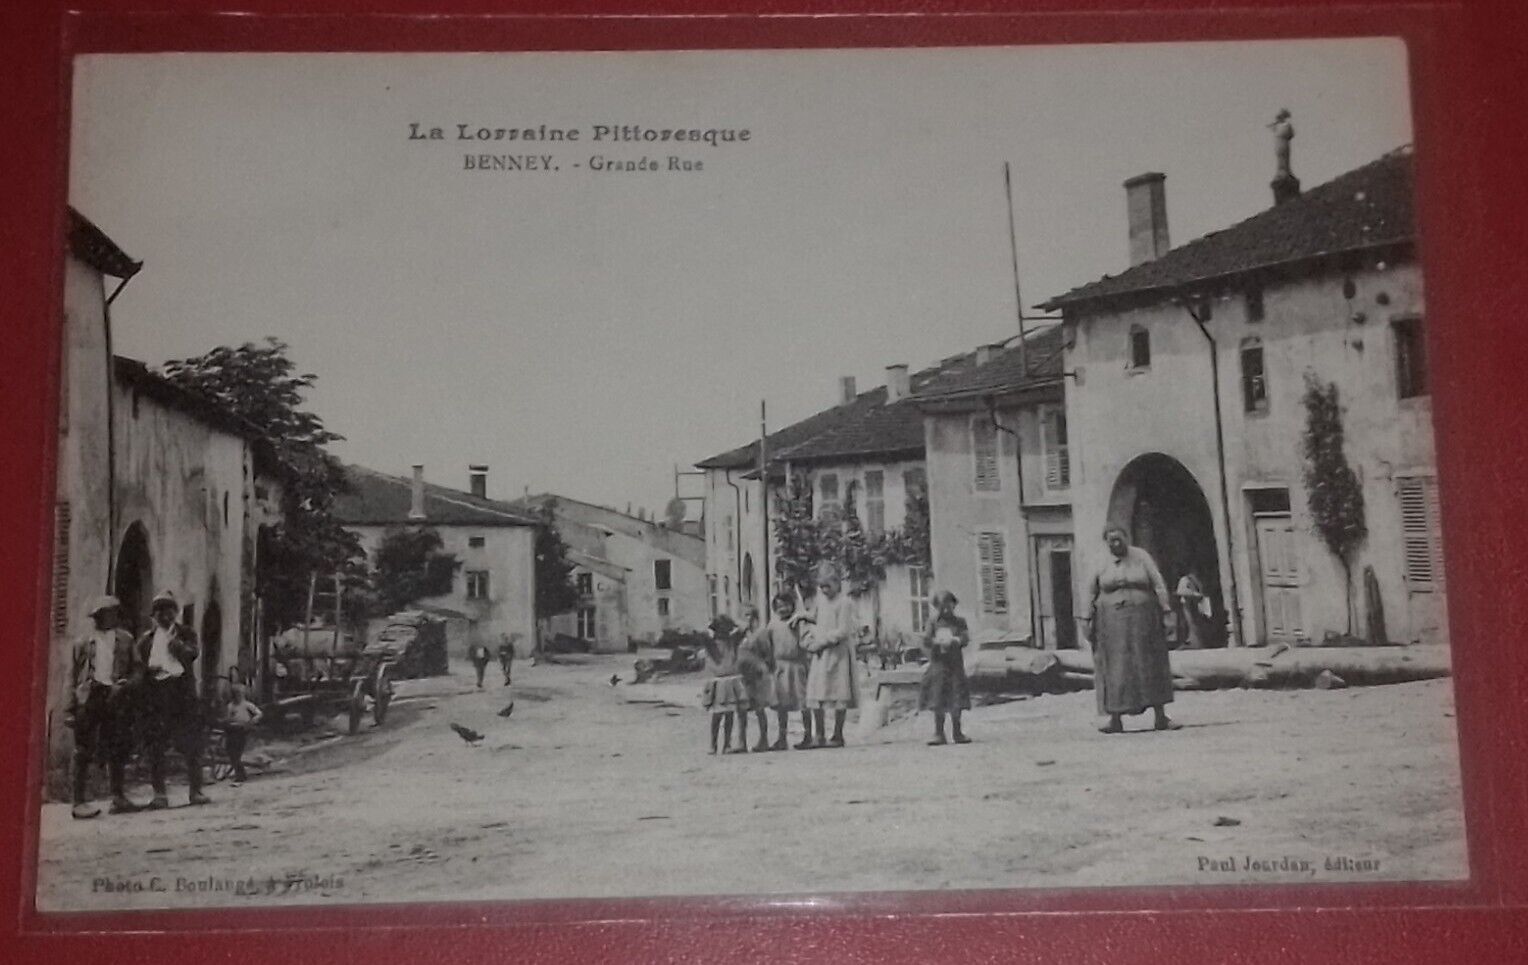 La Lorraine Picturesque-BENNEY Postcard. - Grande Rue-Paul Jourdan-1917-SUP